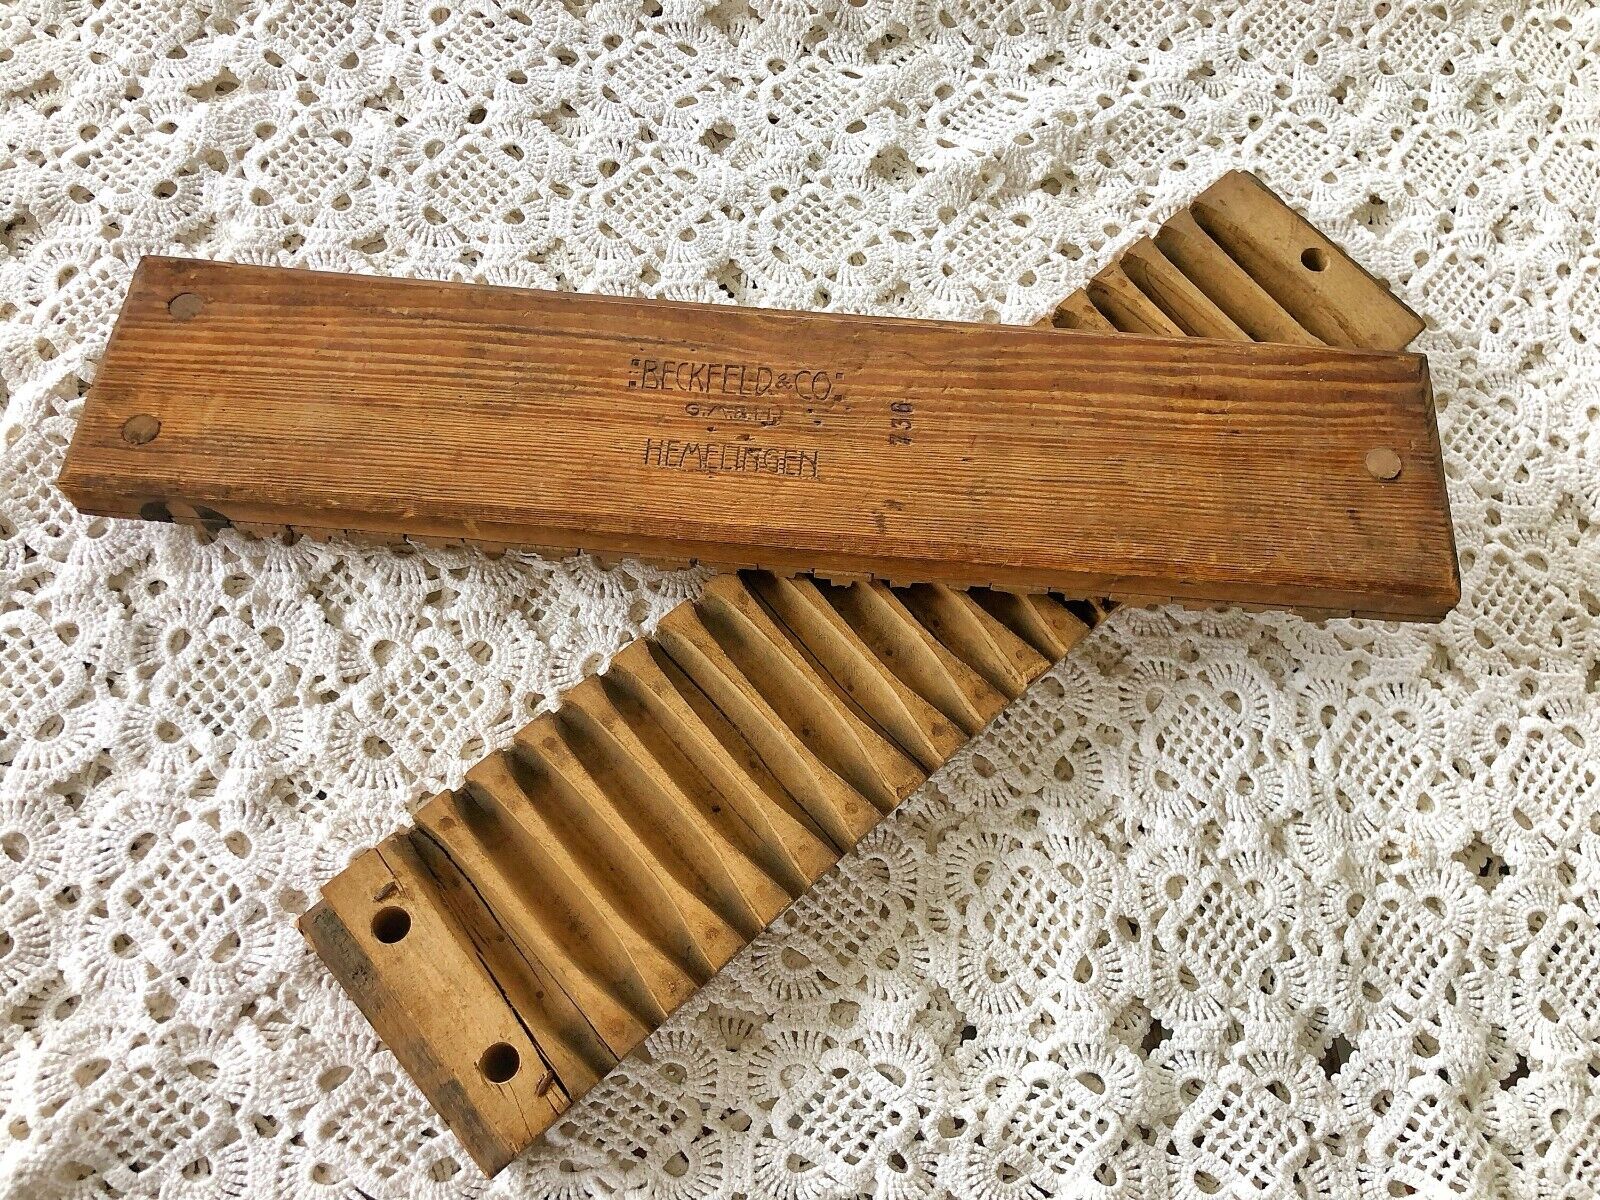 Antique Danish wooden cigar press (BECKFELD  CO HEMELINGEN) 20 slot, Fathers day